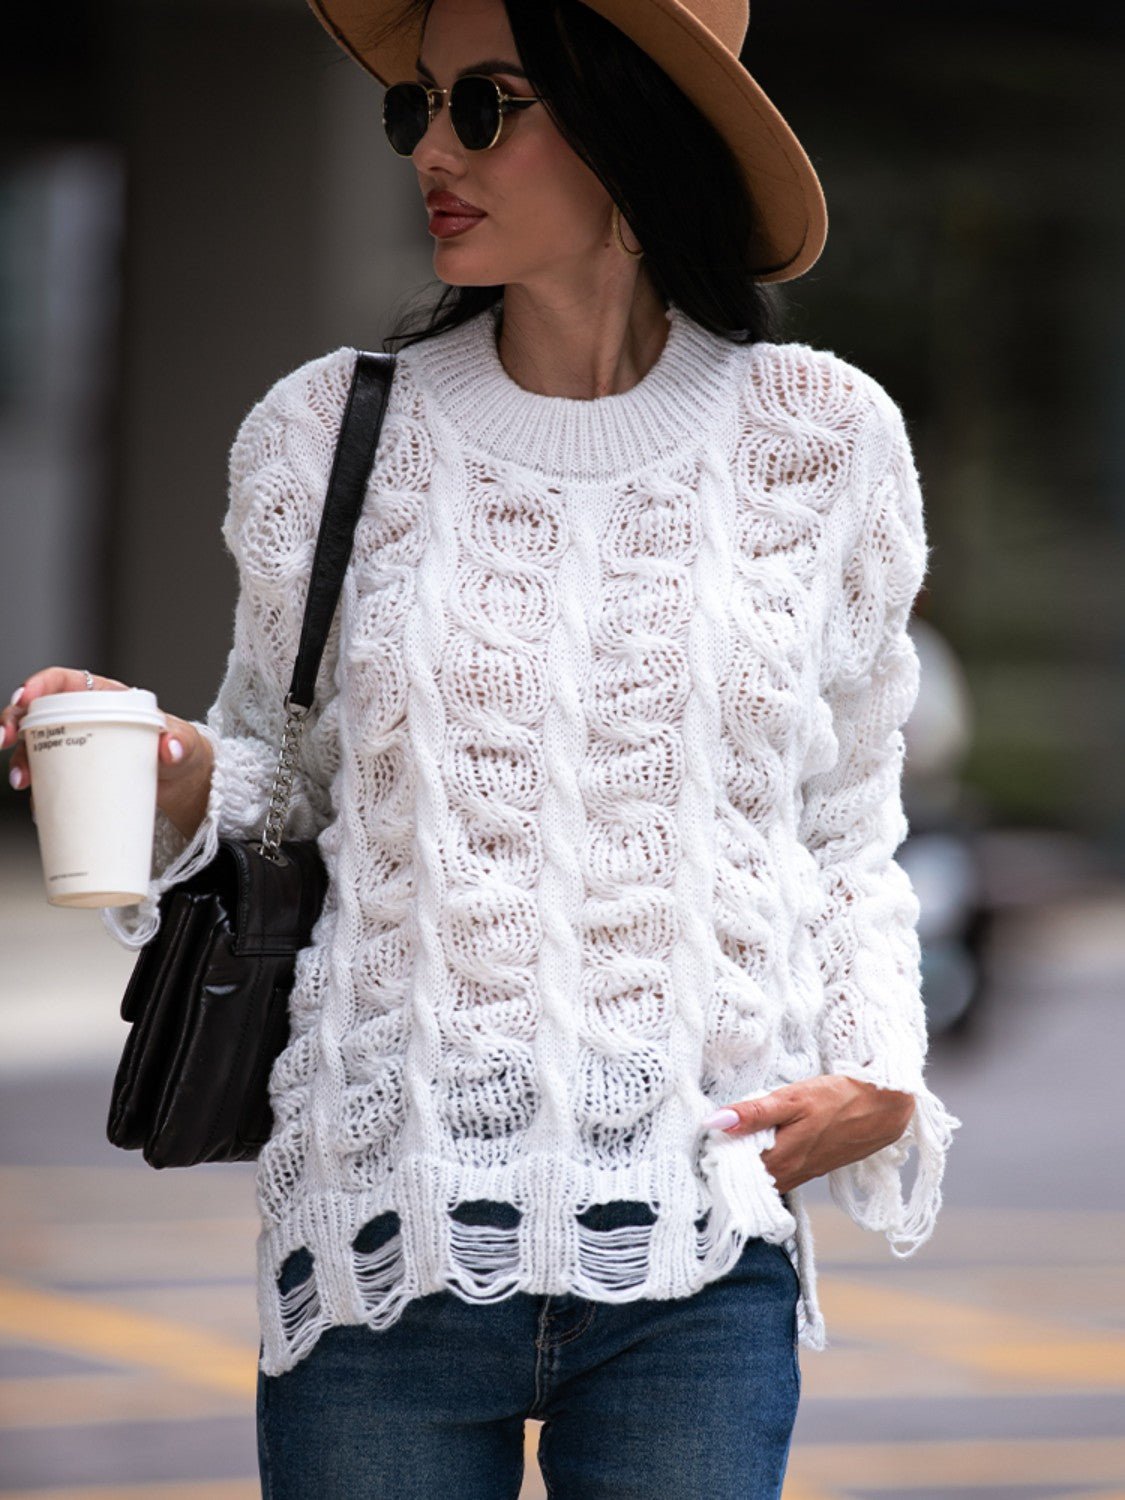 Diana Distressed Sweater - Shop Shea Rock